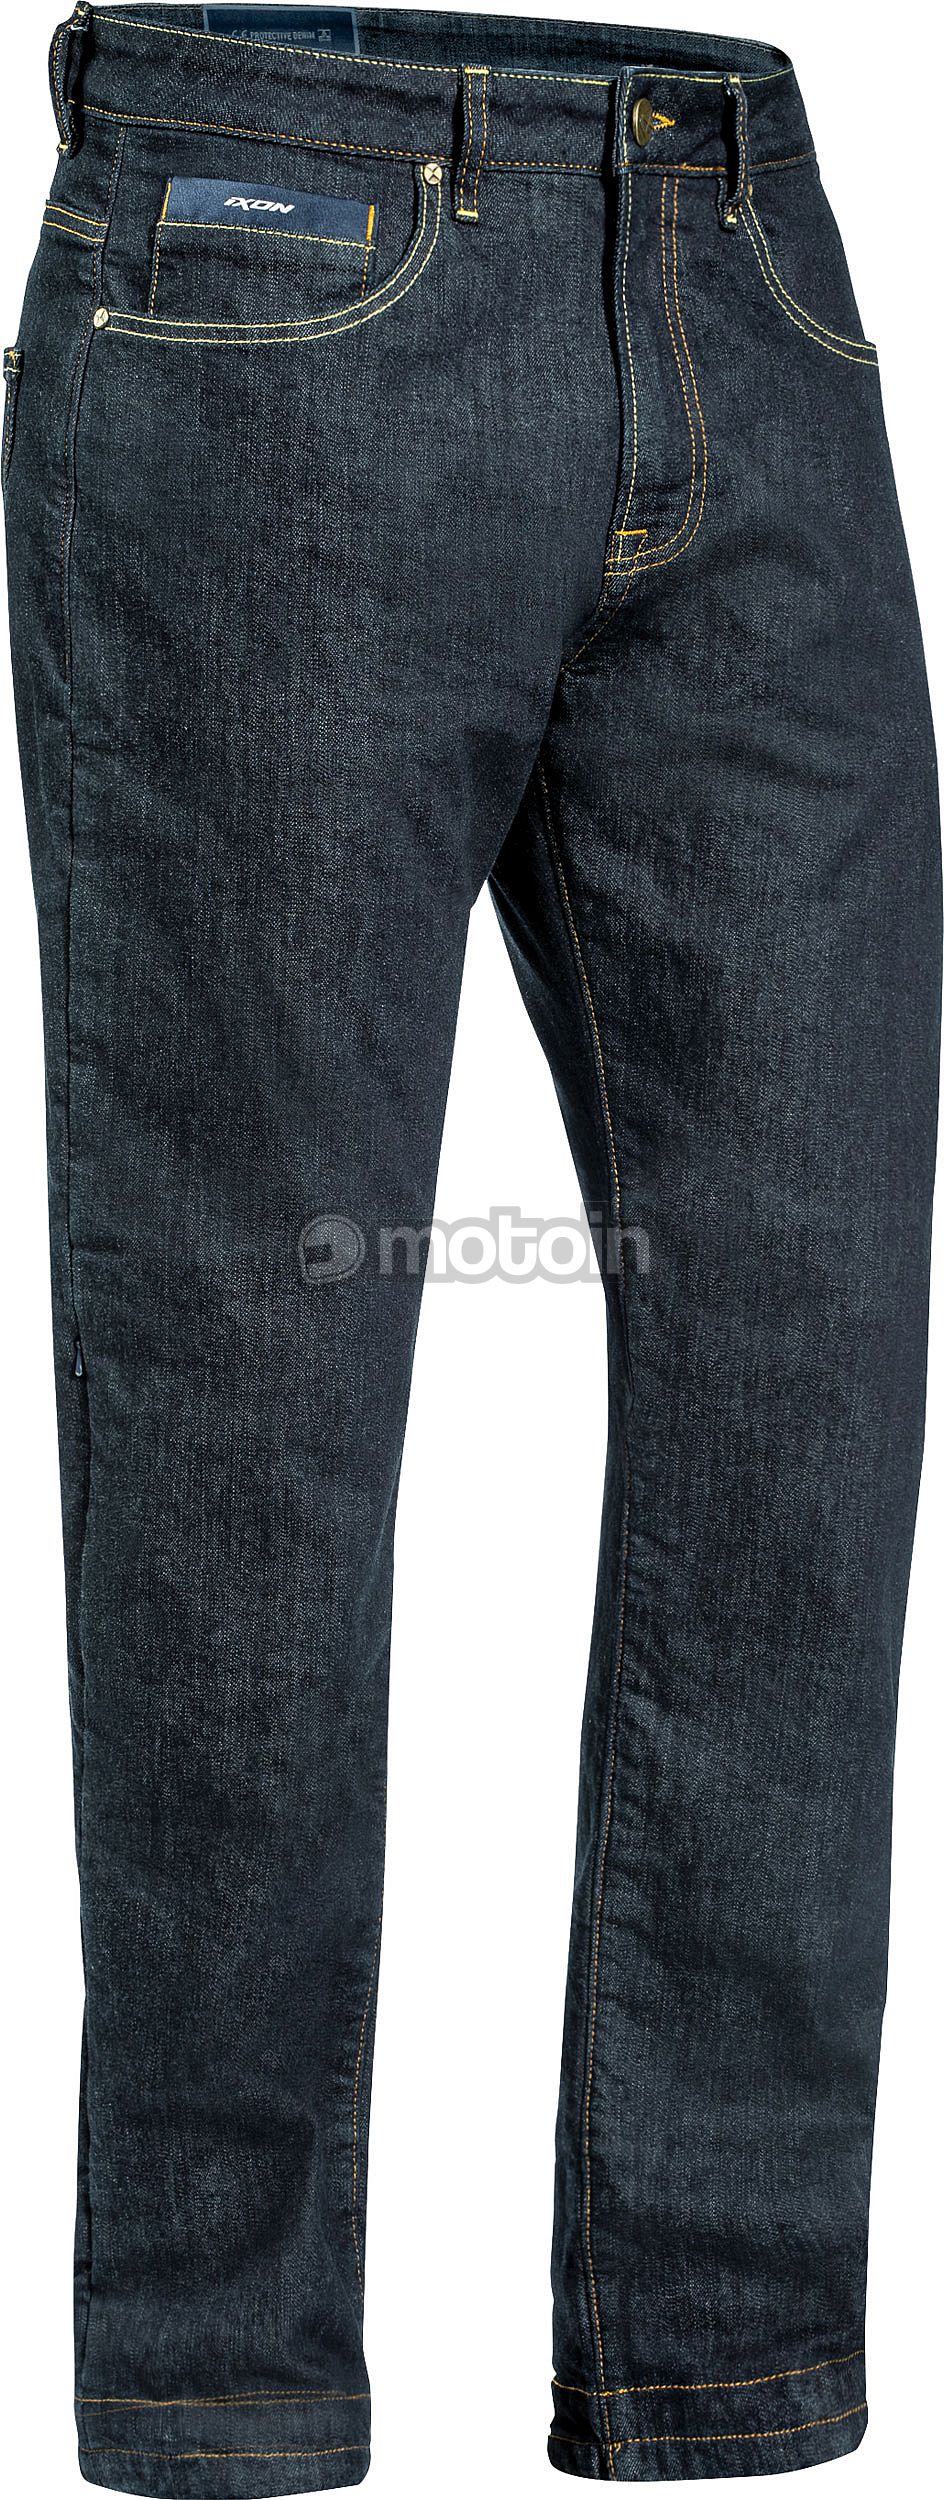 Ixon Freddie, Jeans